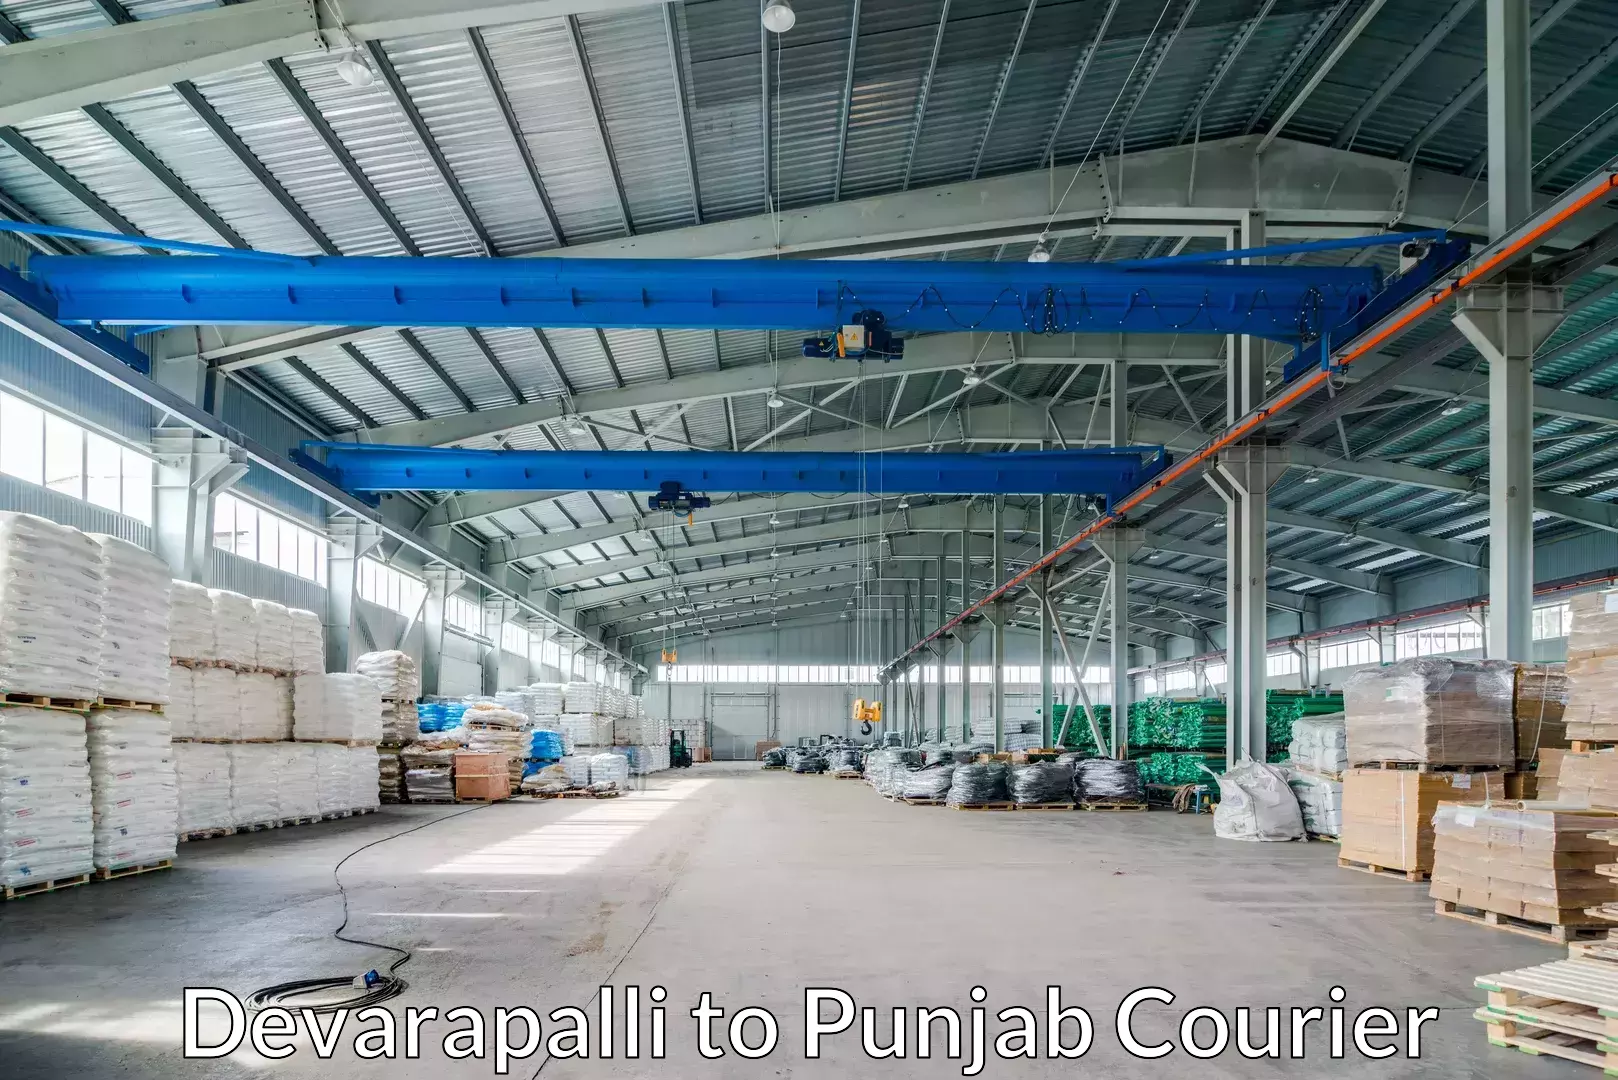 Furniture relocation experts Devarapalli to Punjab